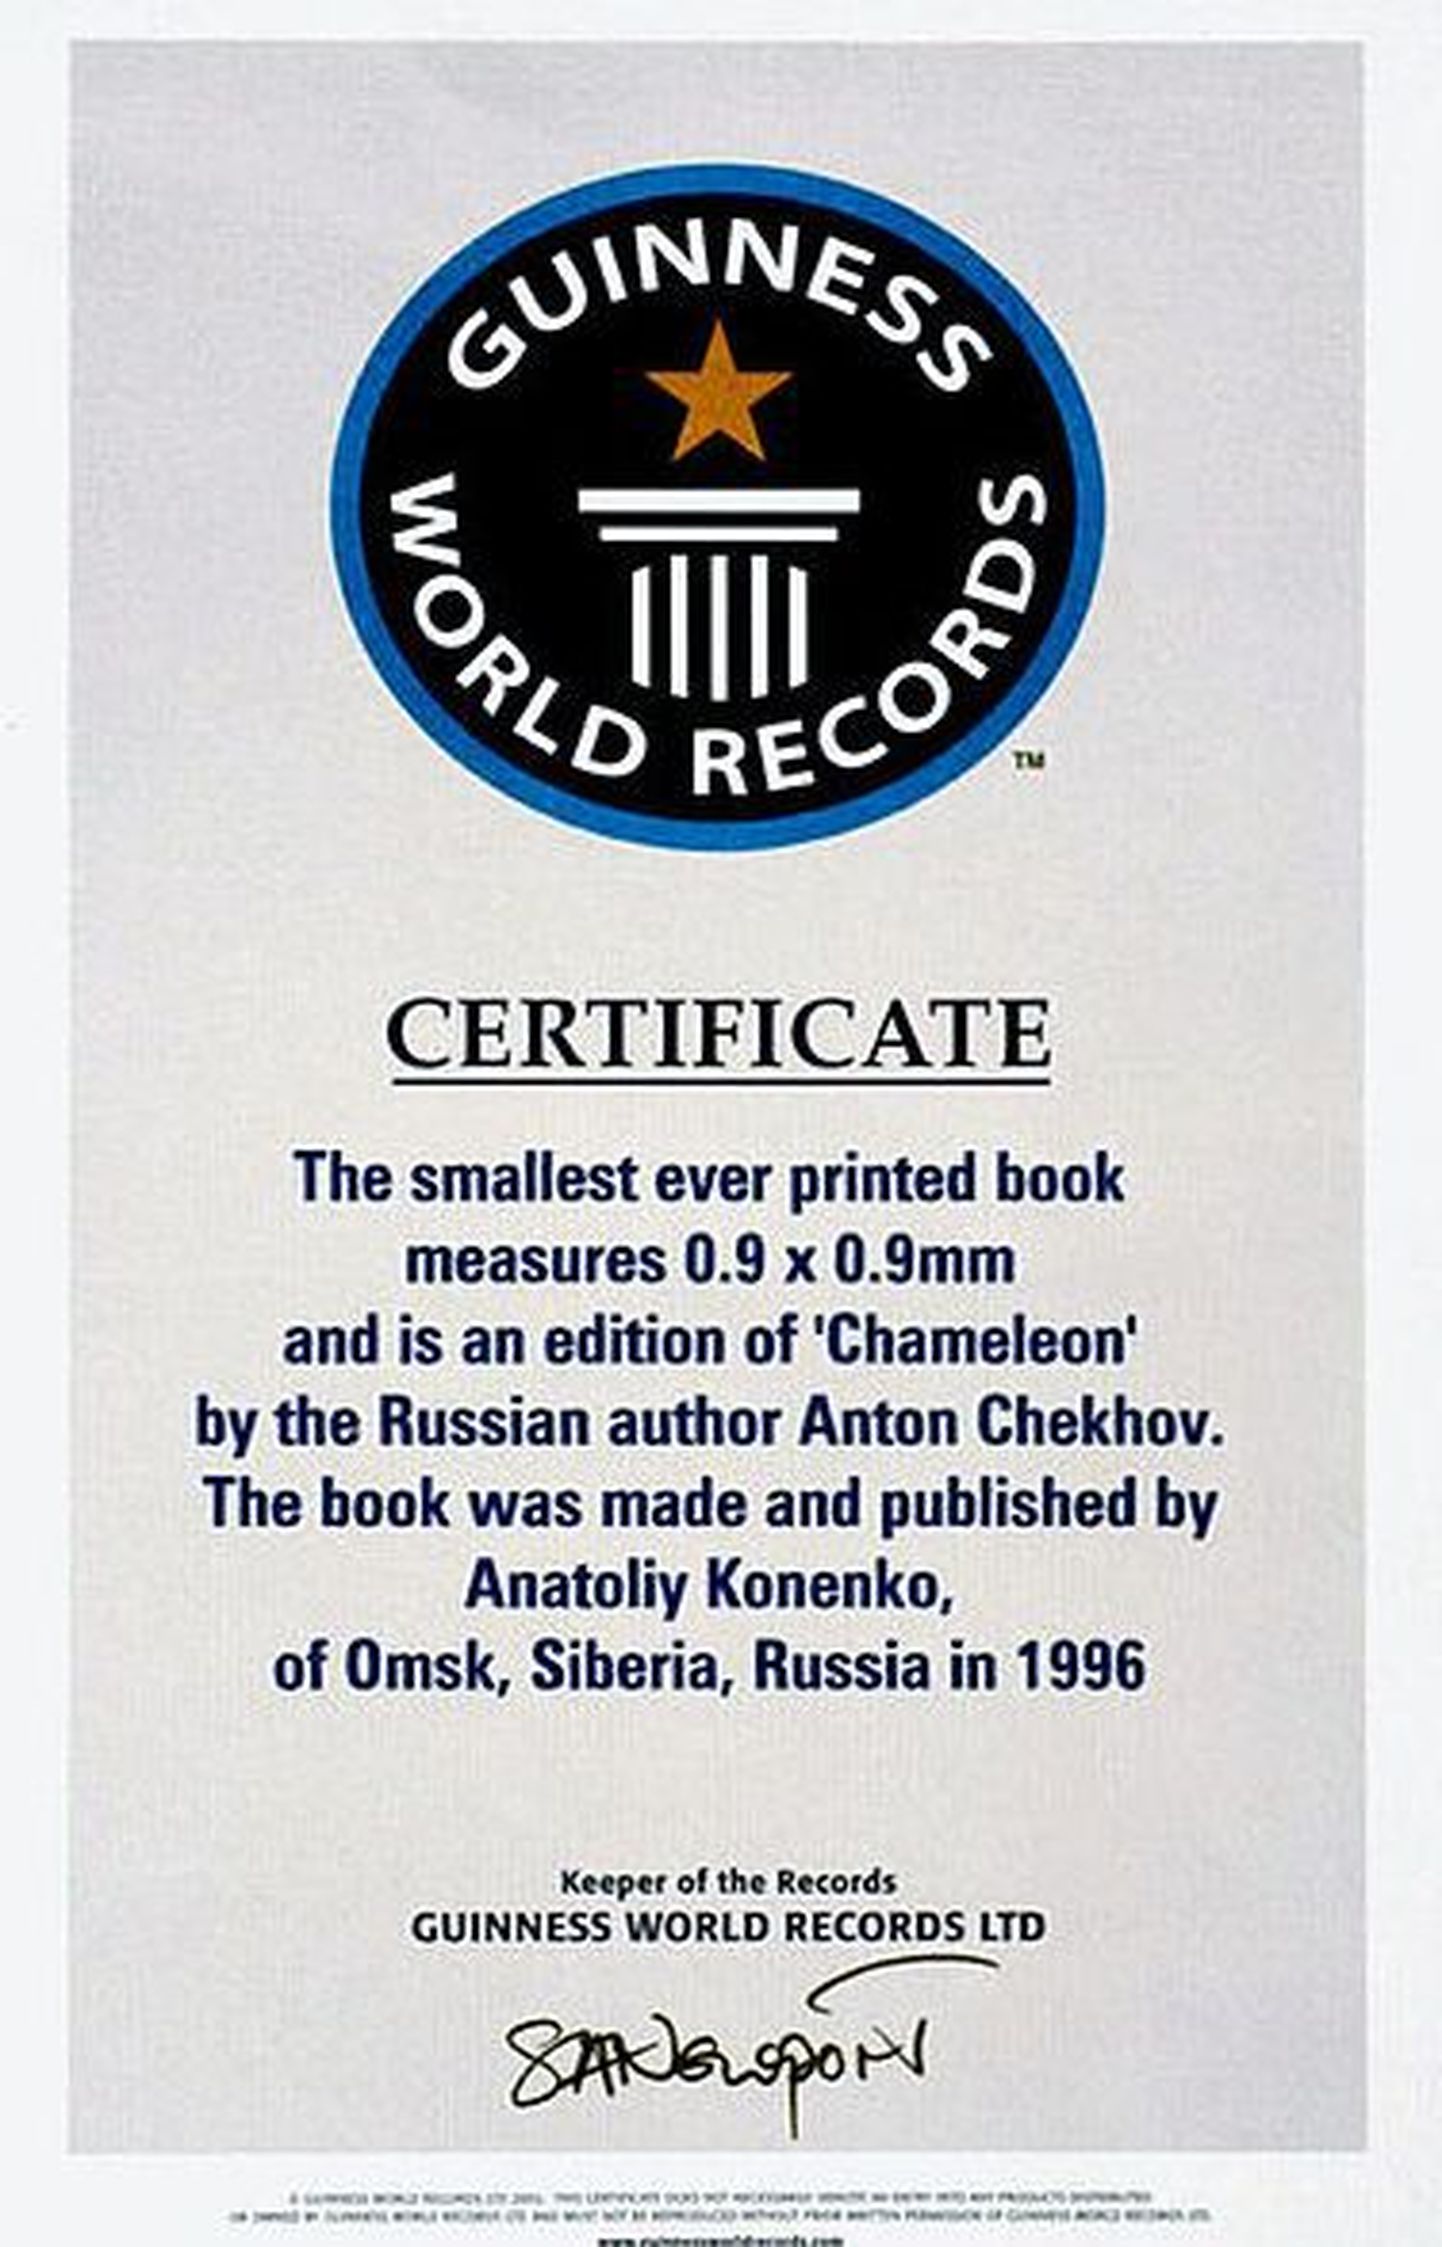 Guinnessi maailmarekordi tsertifikaat